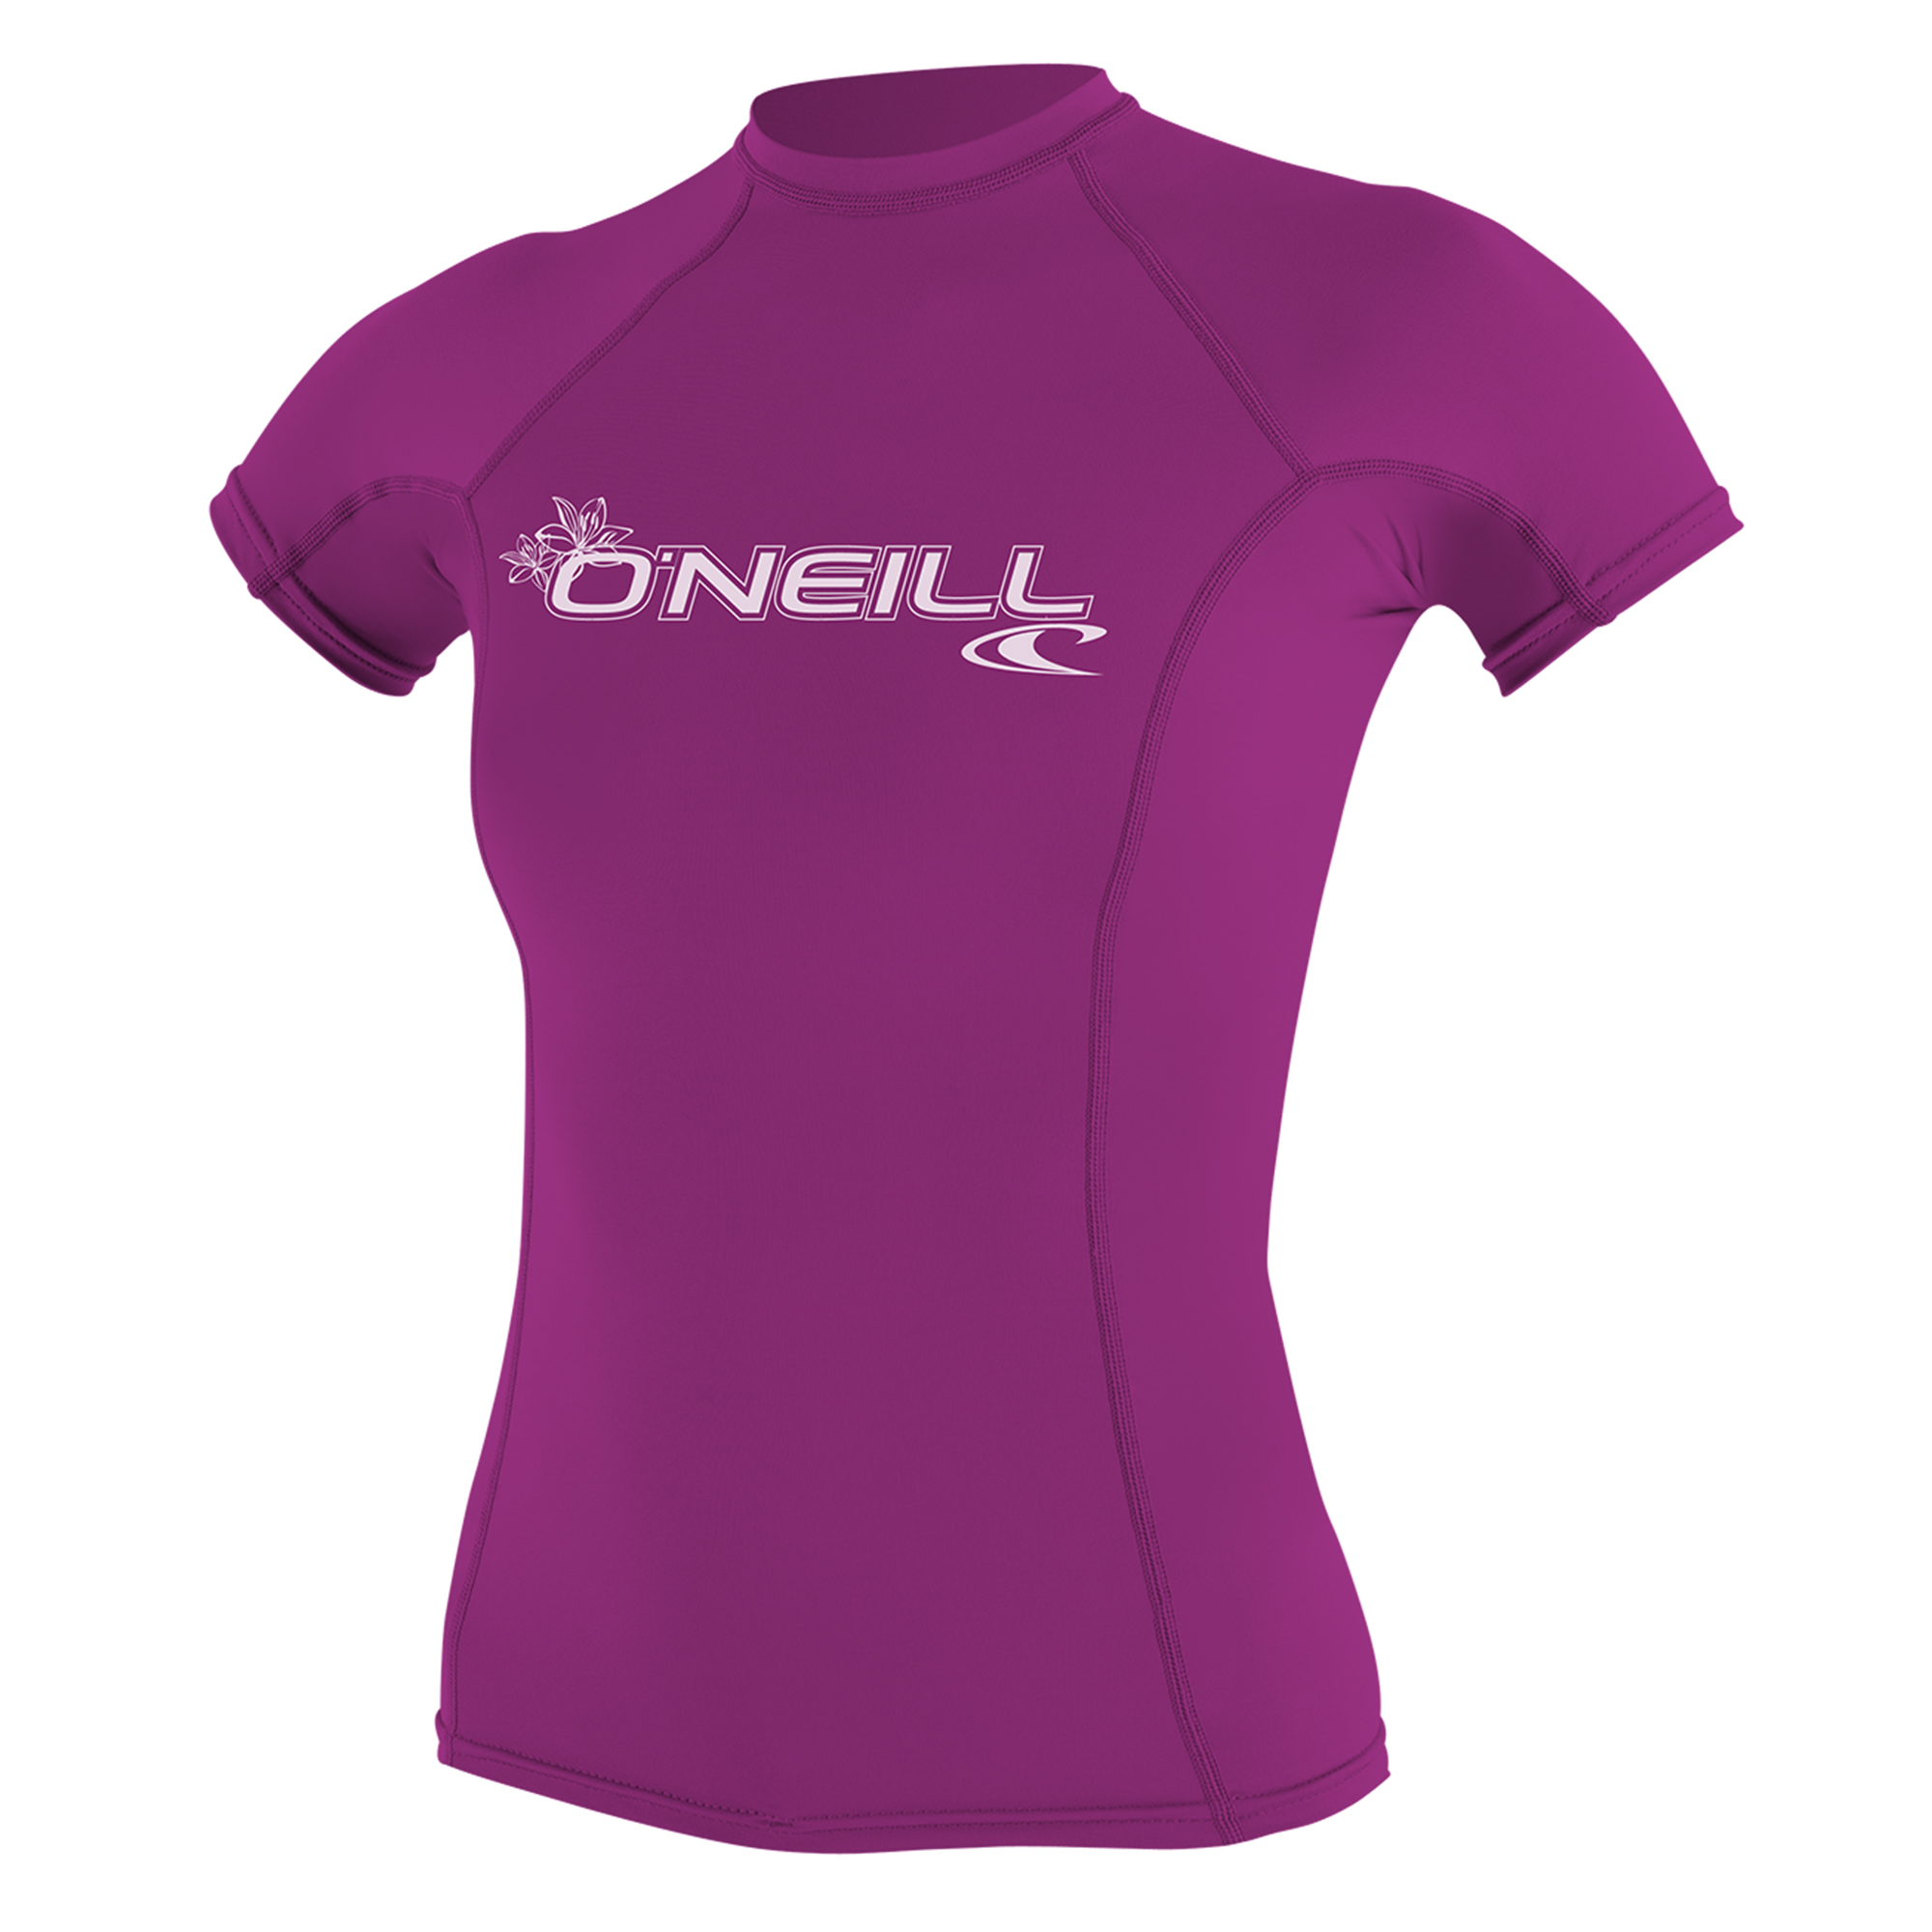 ONeill Wetsuits Girls Youth Basic Skins Short Sleeve Rash Guard Shirt